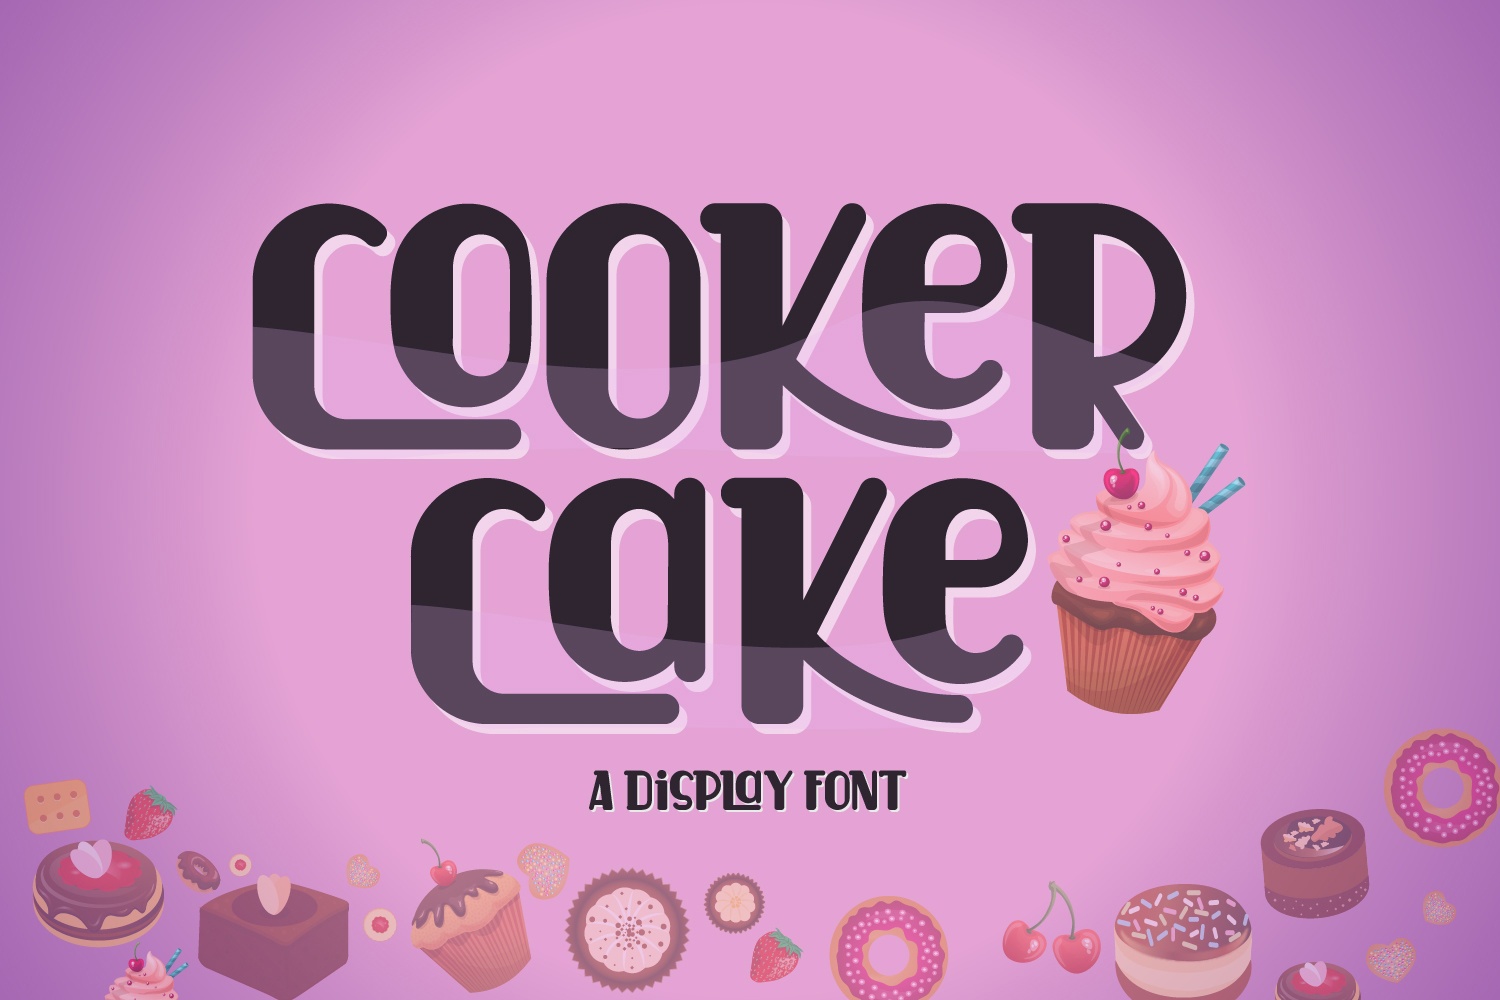 Font Cooker Cake